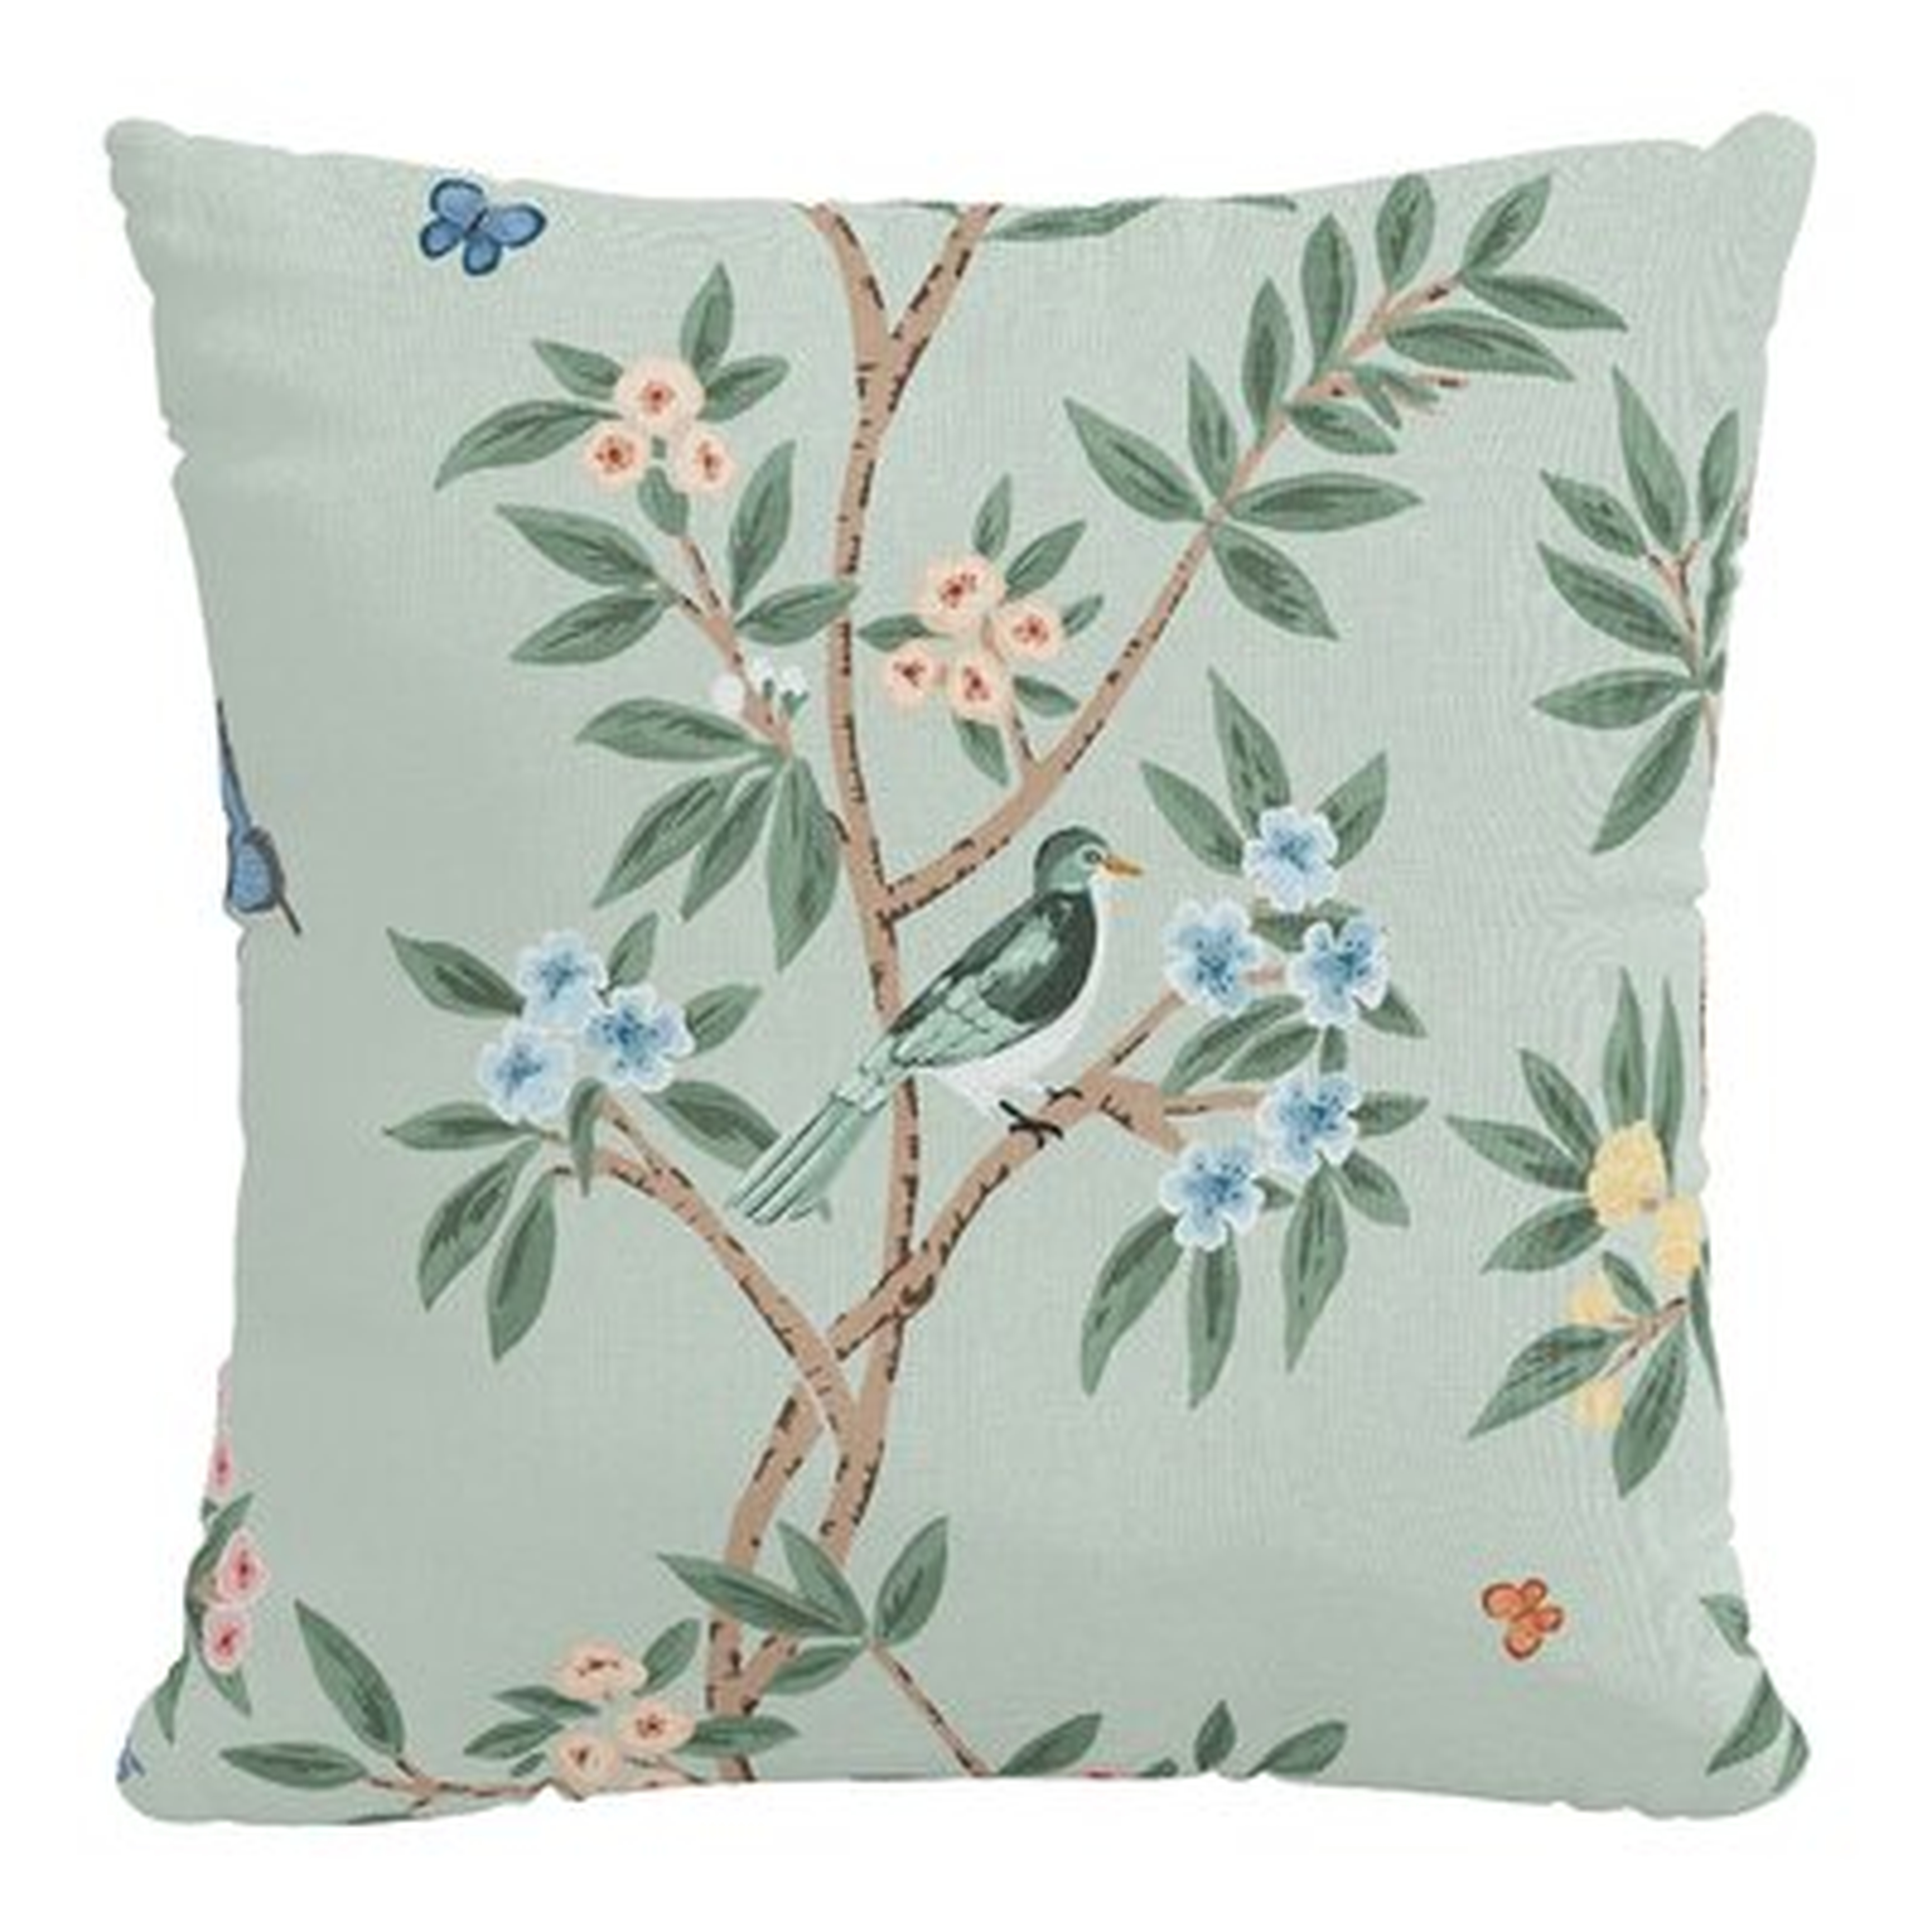 Bahwana Linen Floral Throw Pillow Cover - Birch Lane